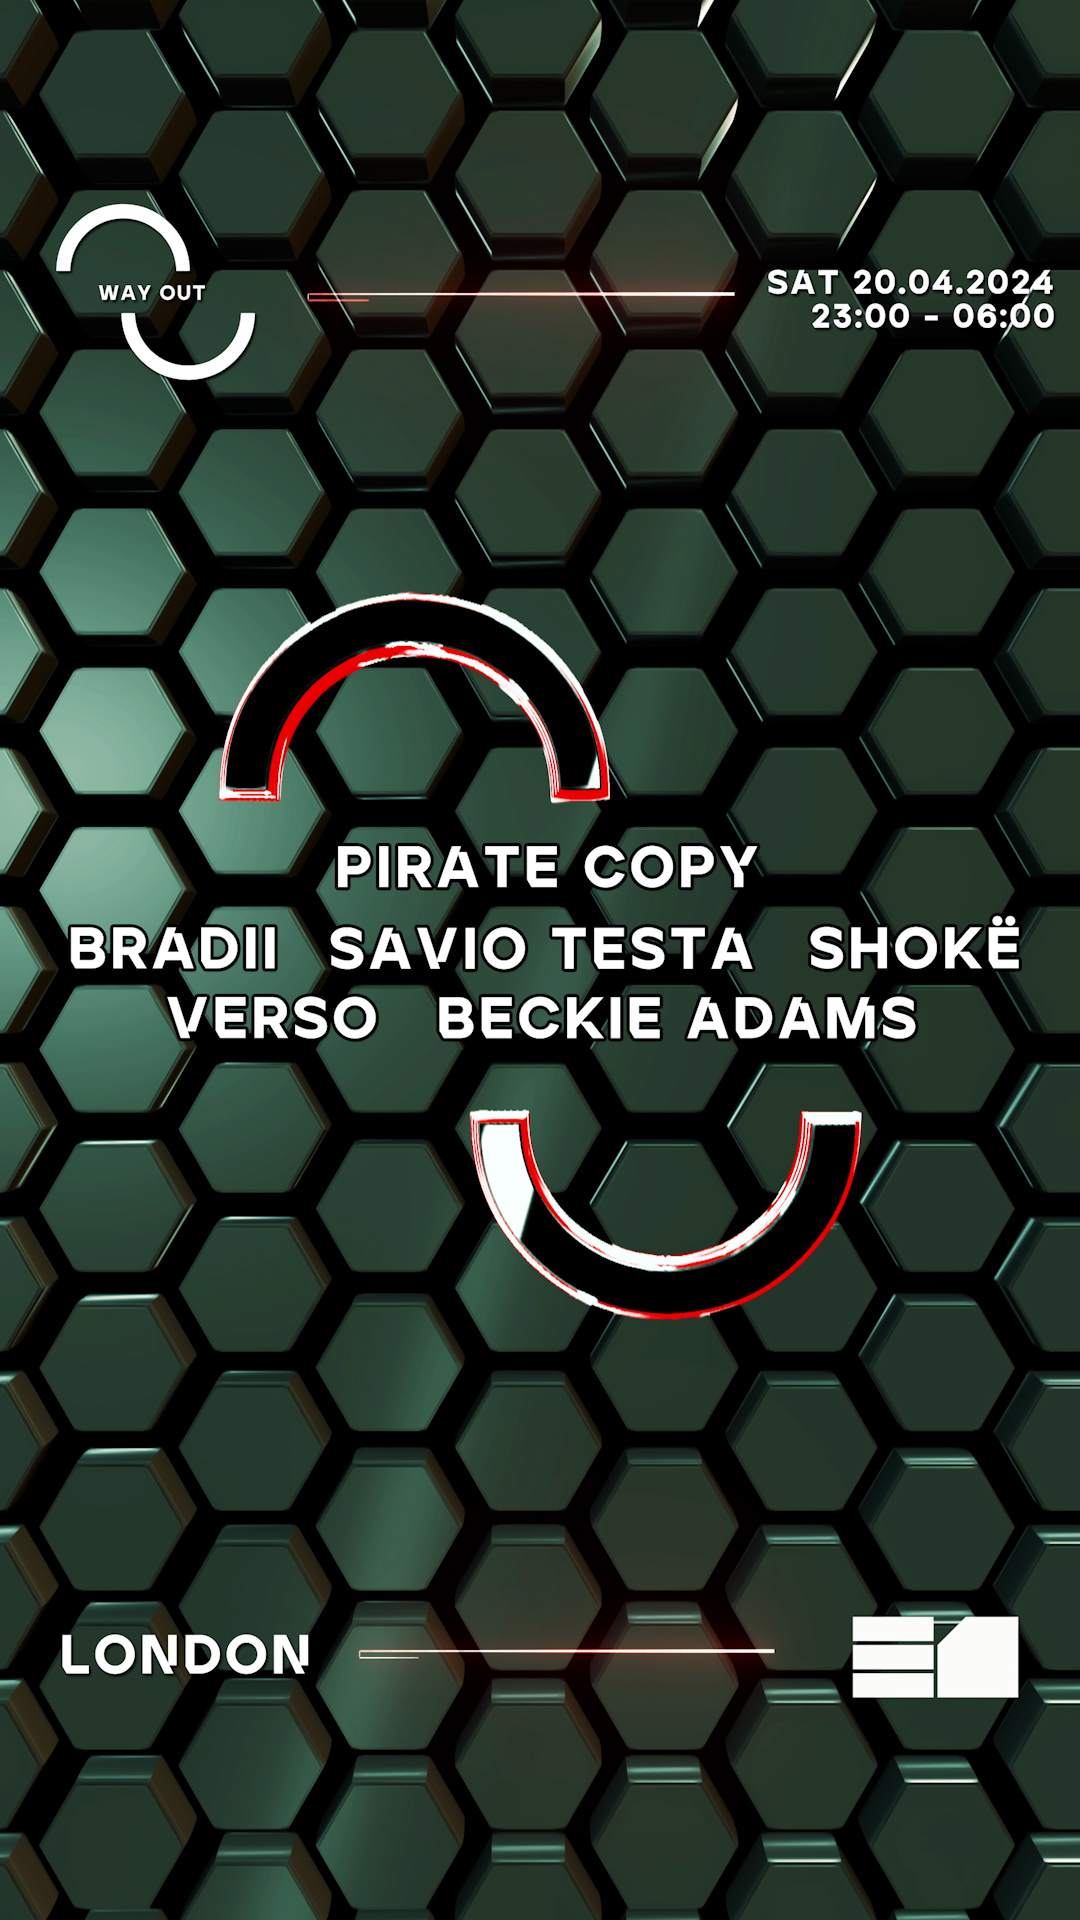 Way Out: Pirate Copy, BRADII & Savio Testa - フライヤー裏